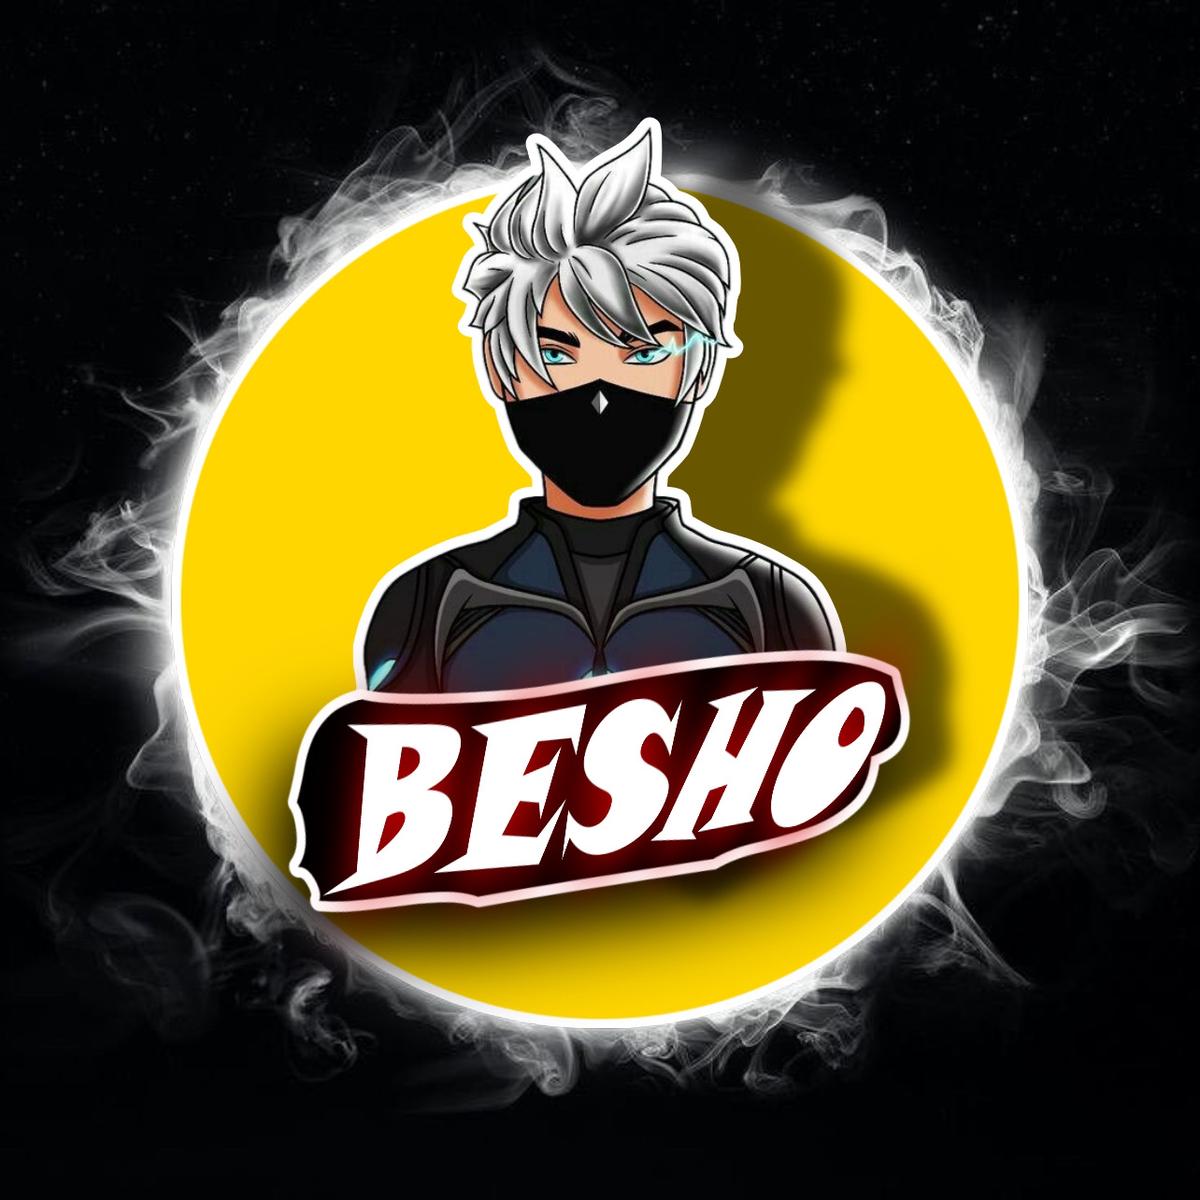 BESHO بيشو